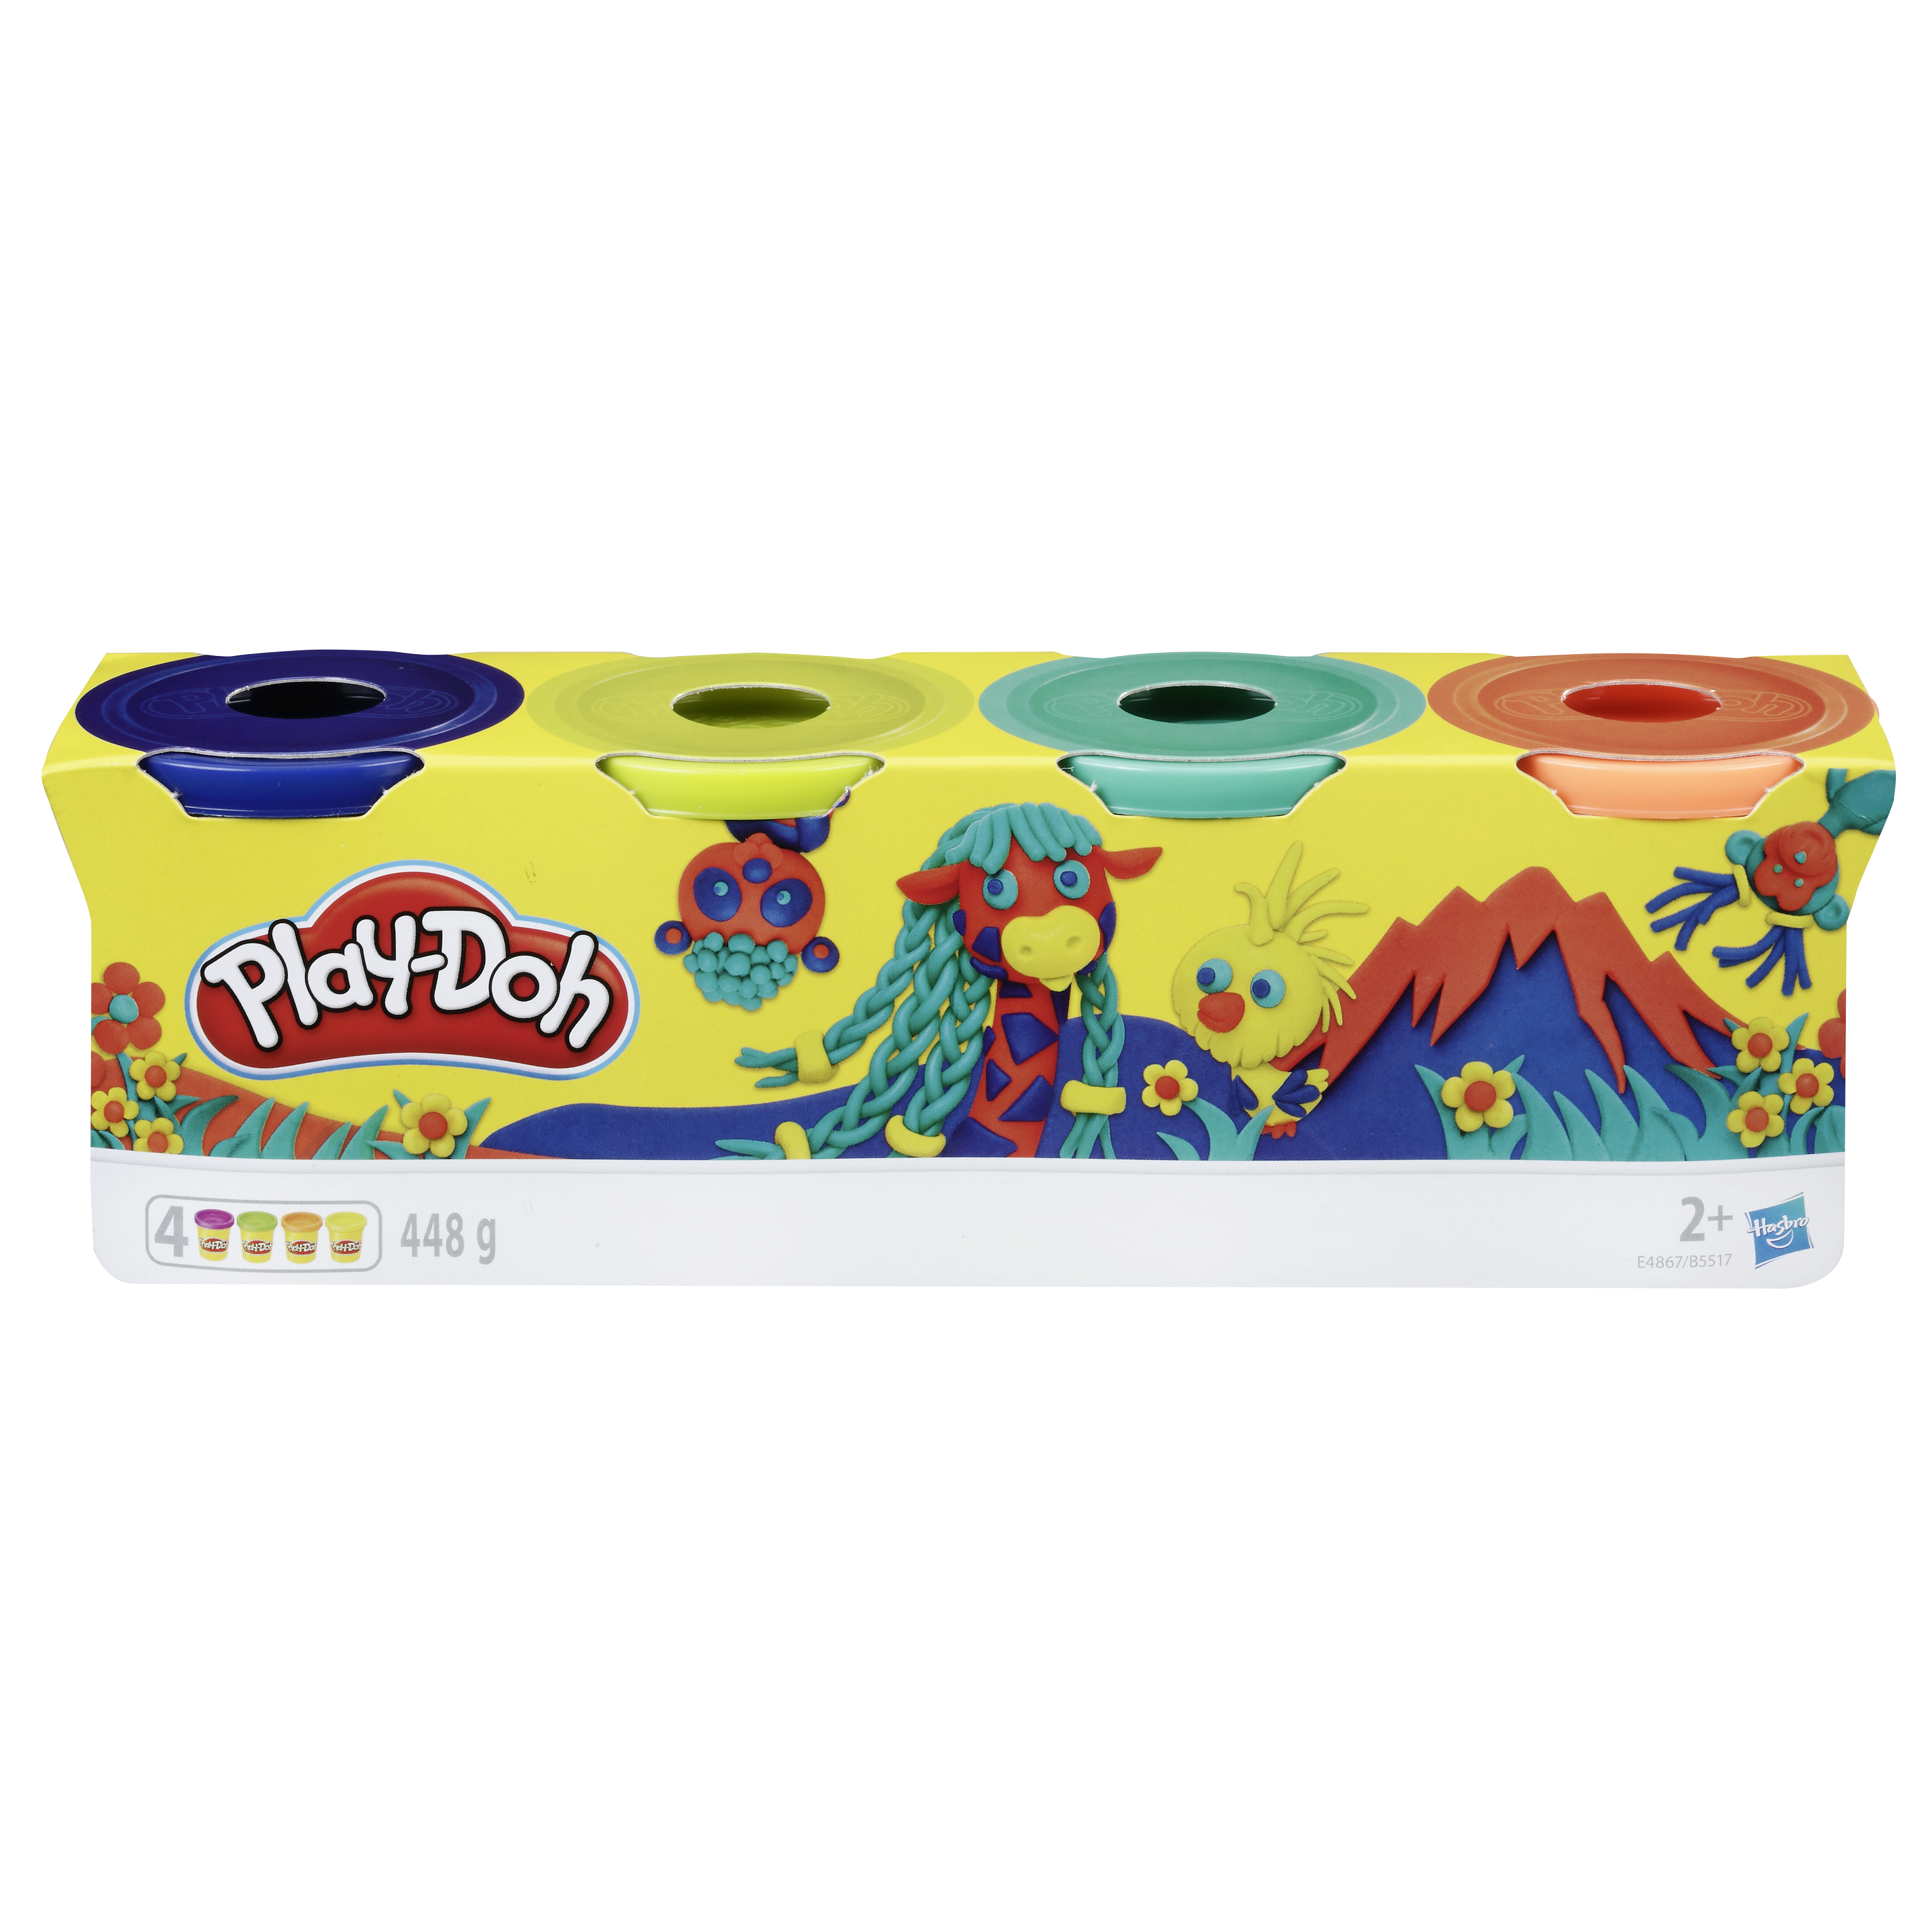 für fantasievolles und kreatives Sp... Toaster Knete Hasbro Play-Doh E0039EU4 